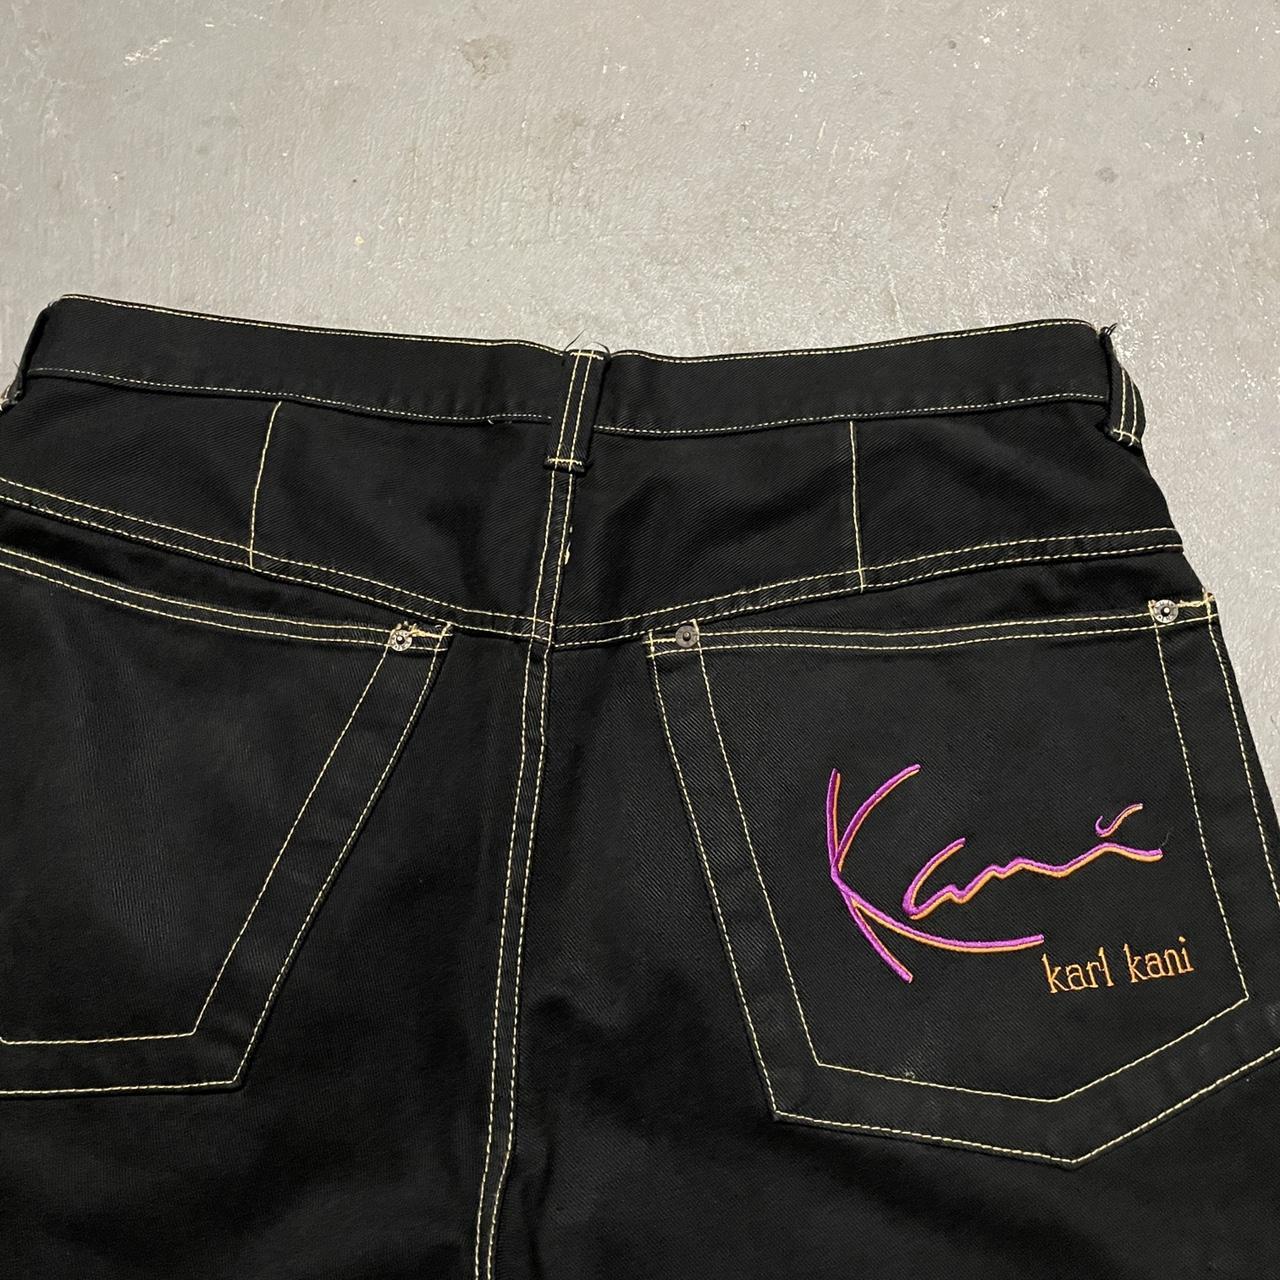 Karl Kani Men's Black and Purple Jeans (3)